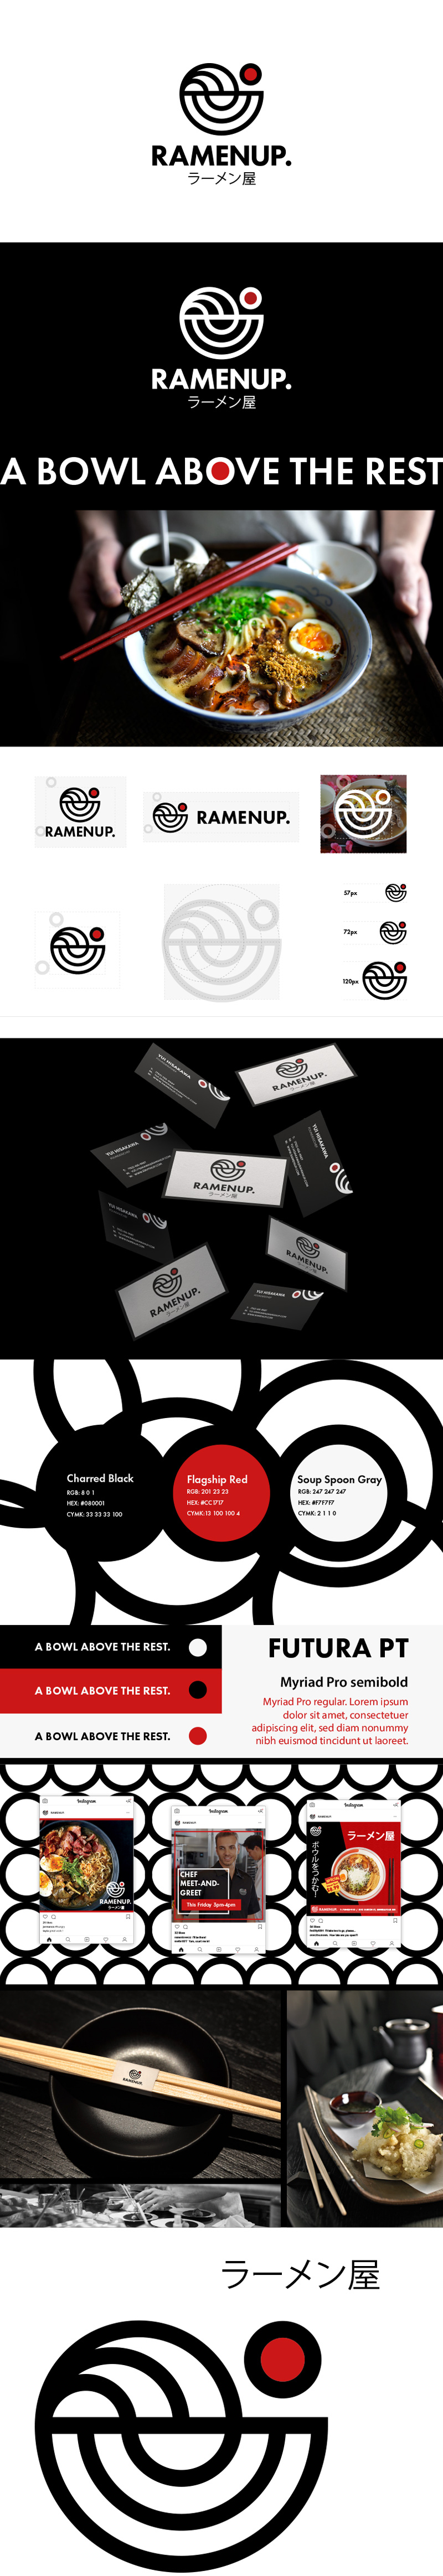 Quapro brand presentation showcasing new logo design, color use, typography and mockups